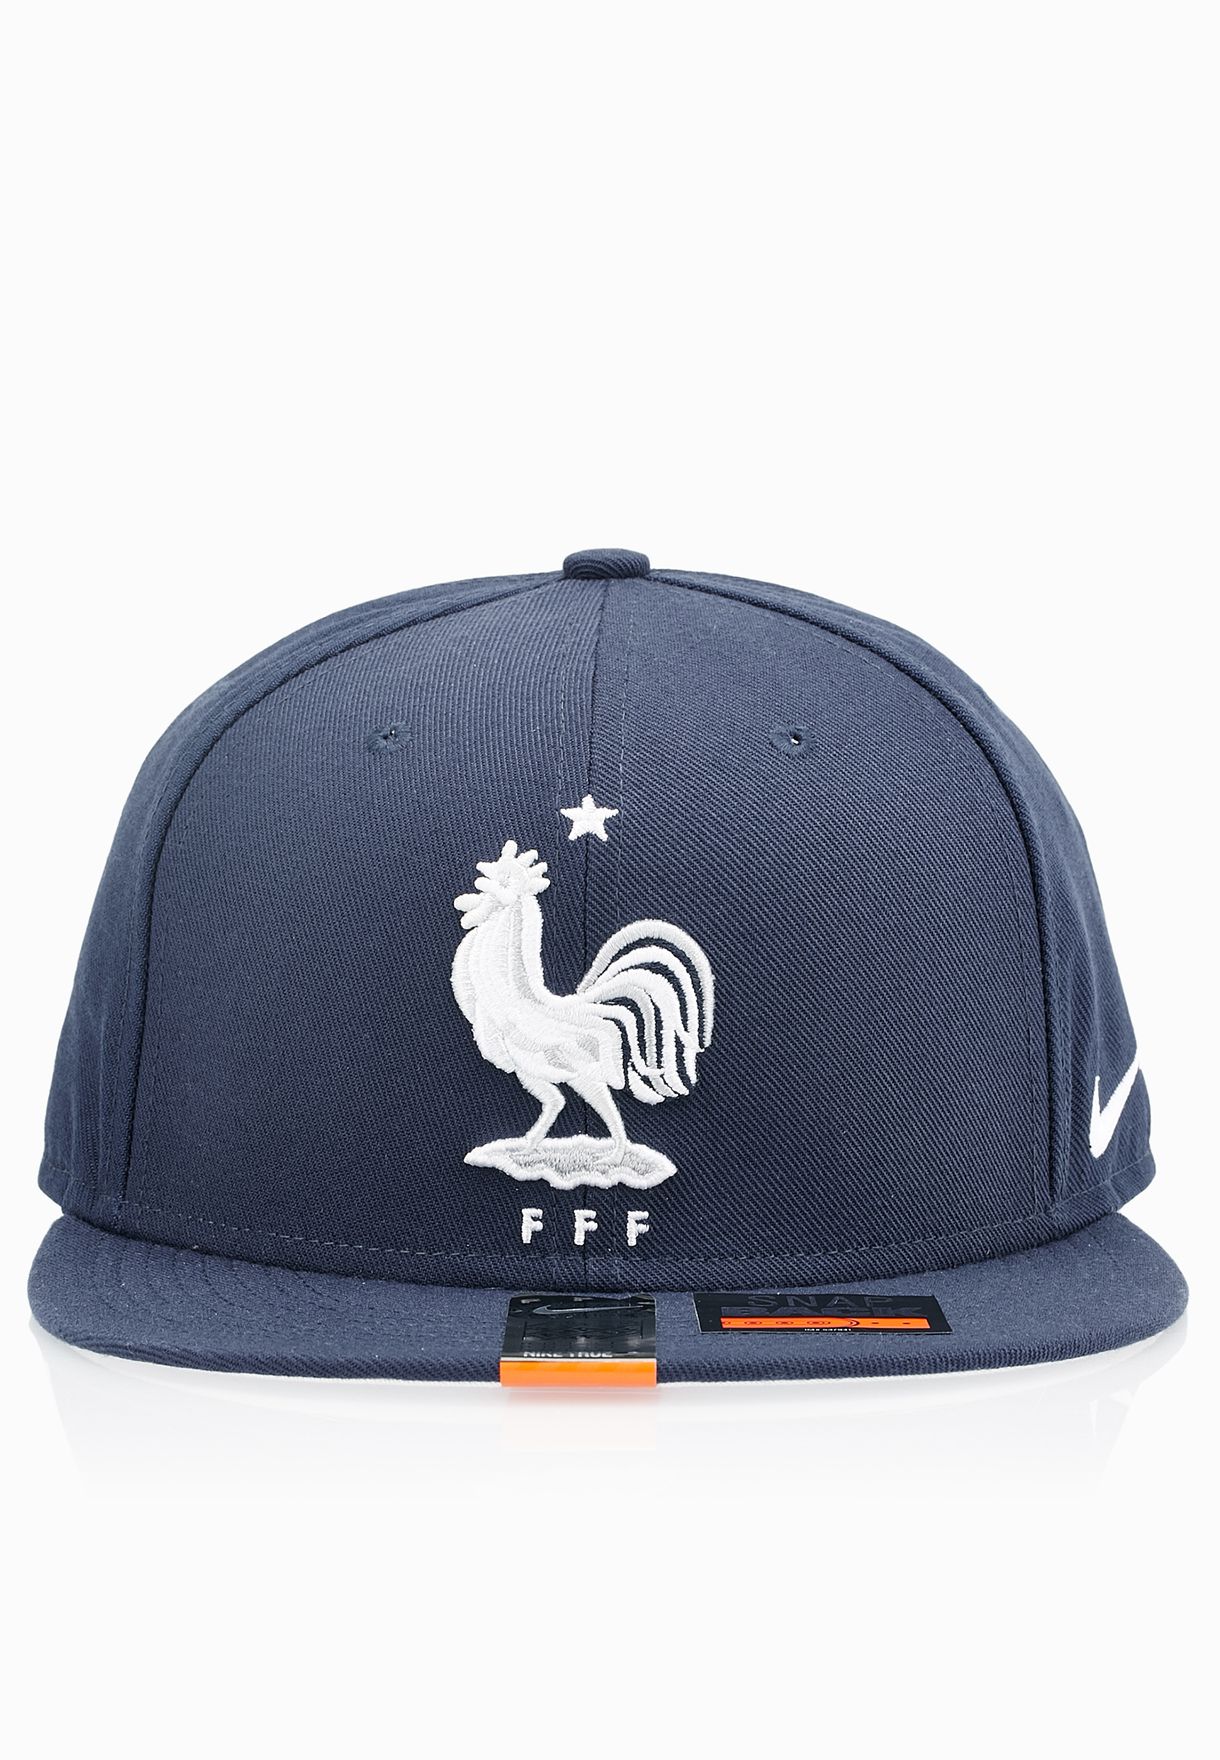 French Football Federation Fi Collection Snapback Flatbill Calcio Cappello 